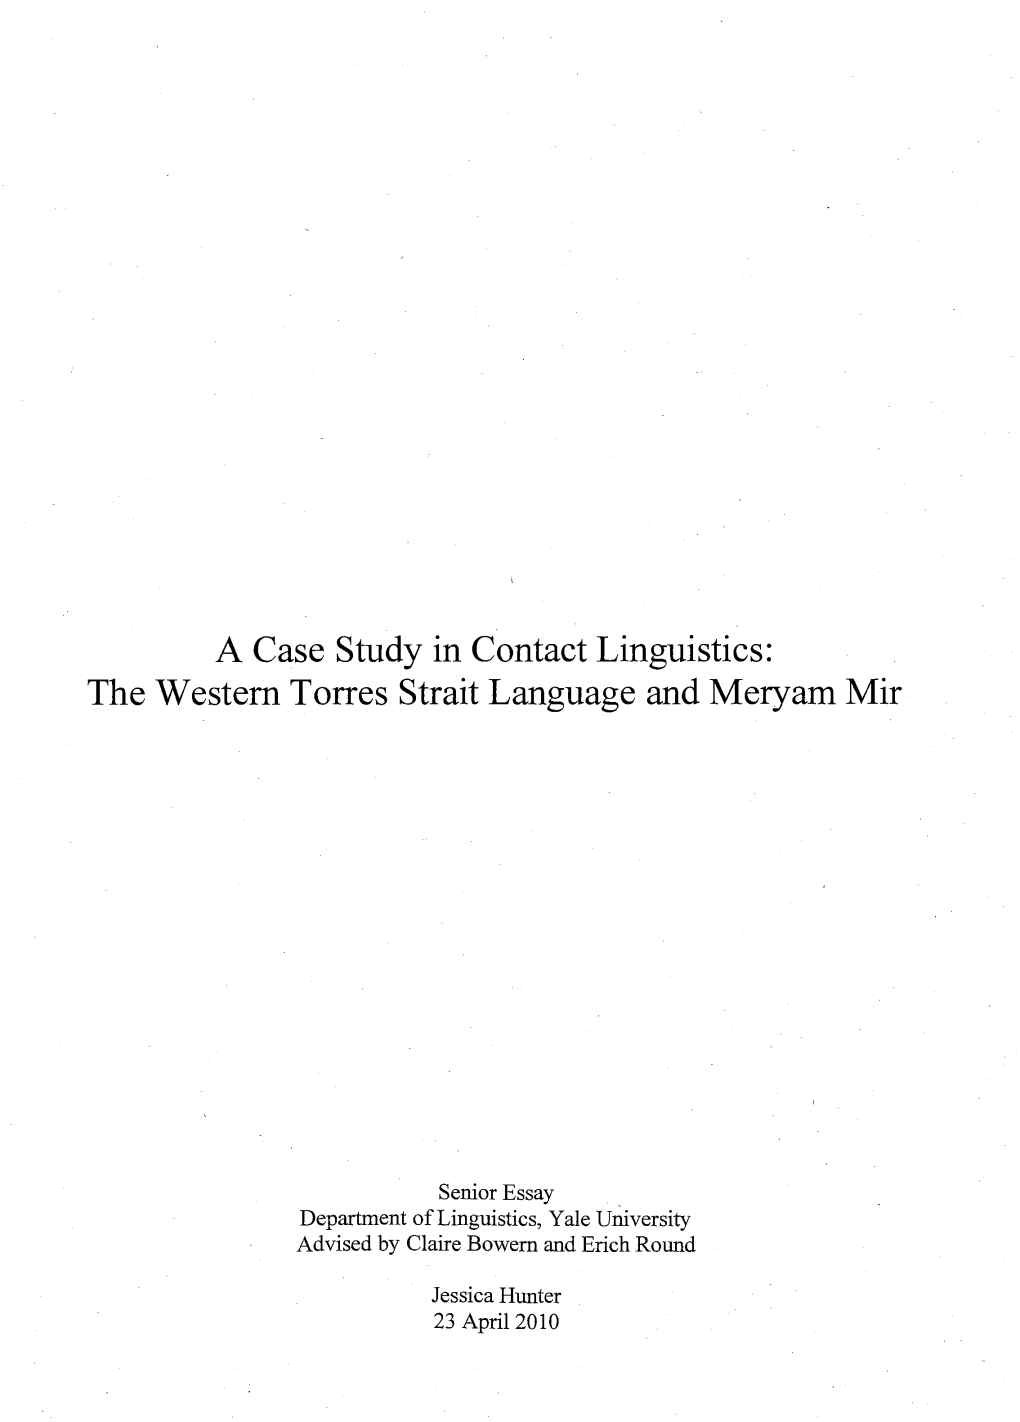 The Western Torres Strait Language and Meryam Mir